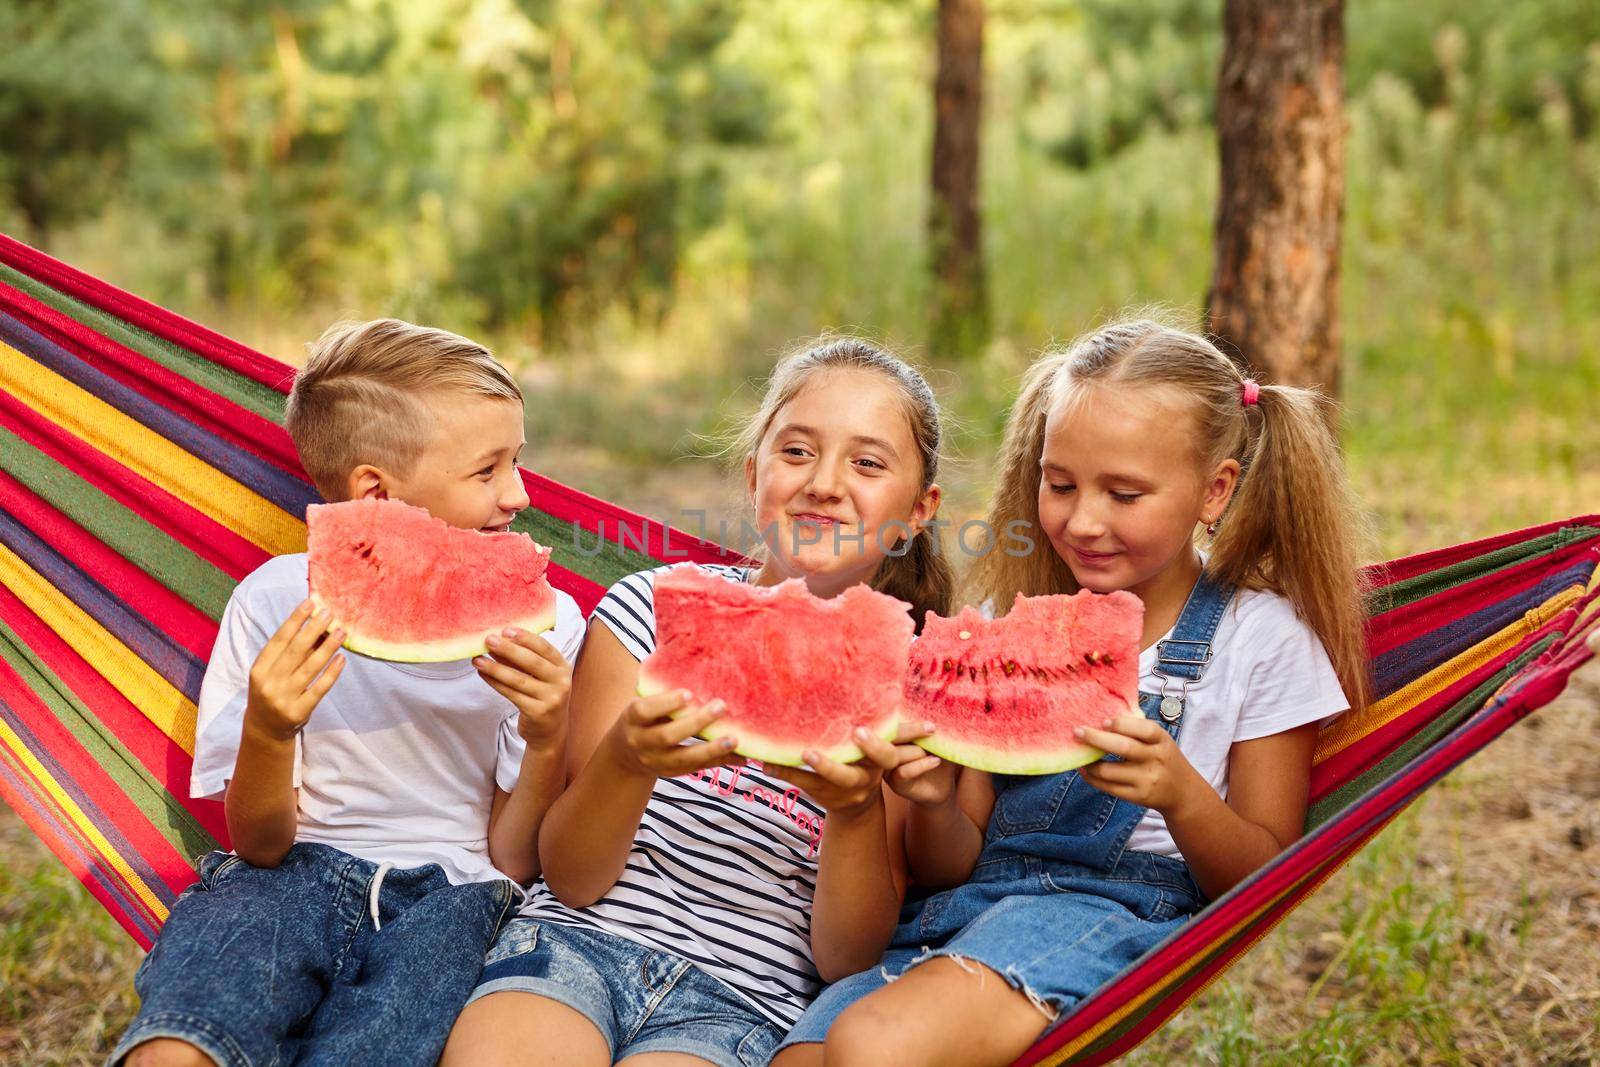 children eat watermelon and joke, outdoor, sitting on a colorful hammock. by InnaVlasova